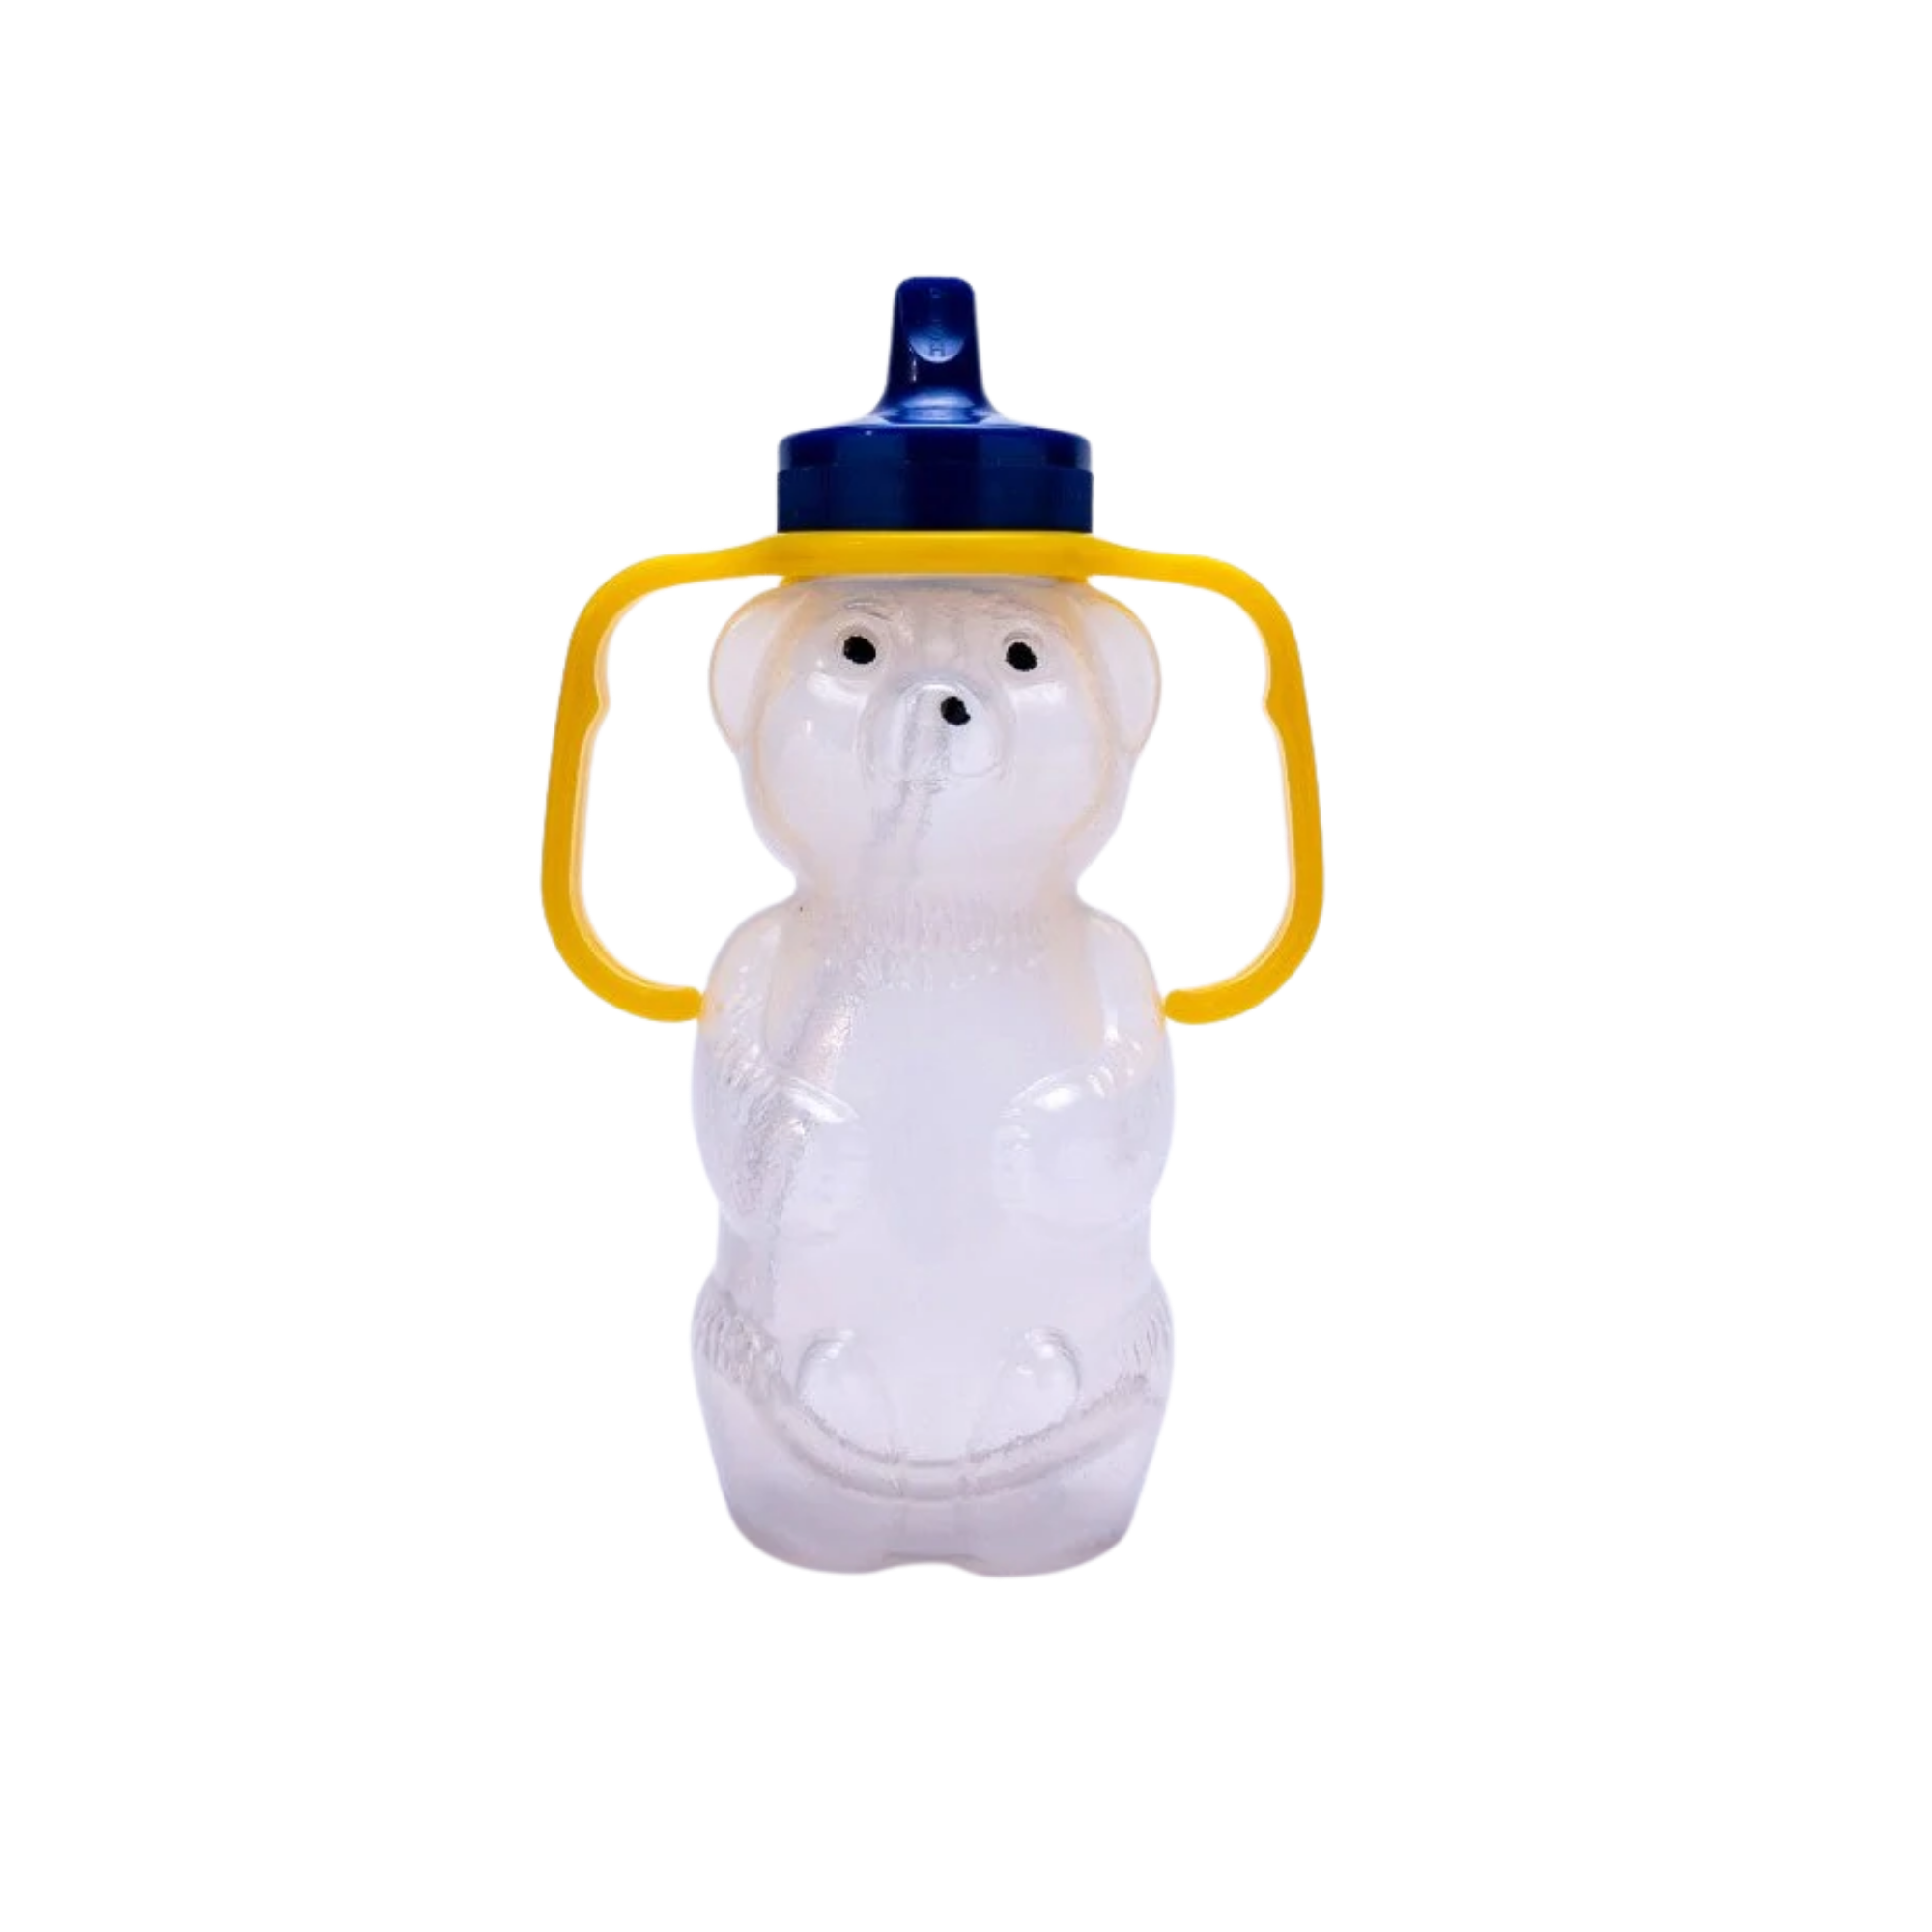 The Original Honey Bear with Flexible Straw - TalkTools